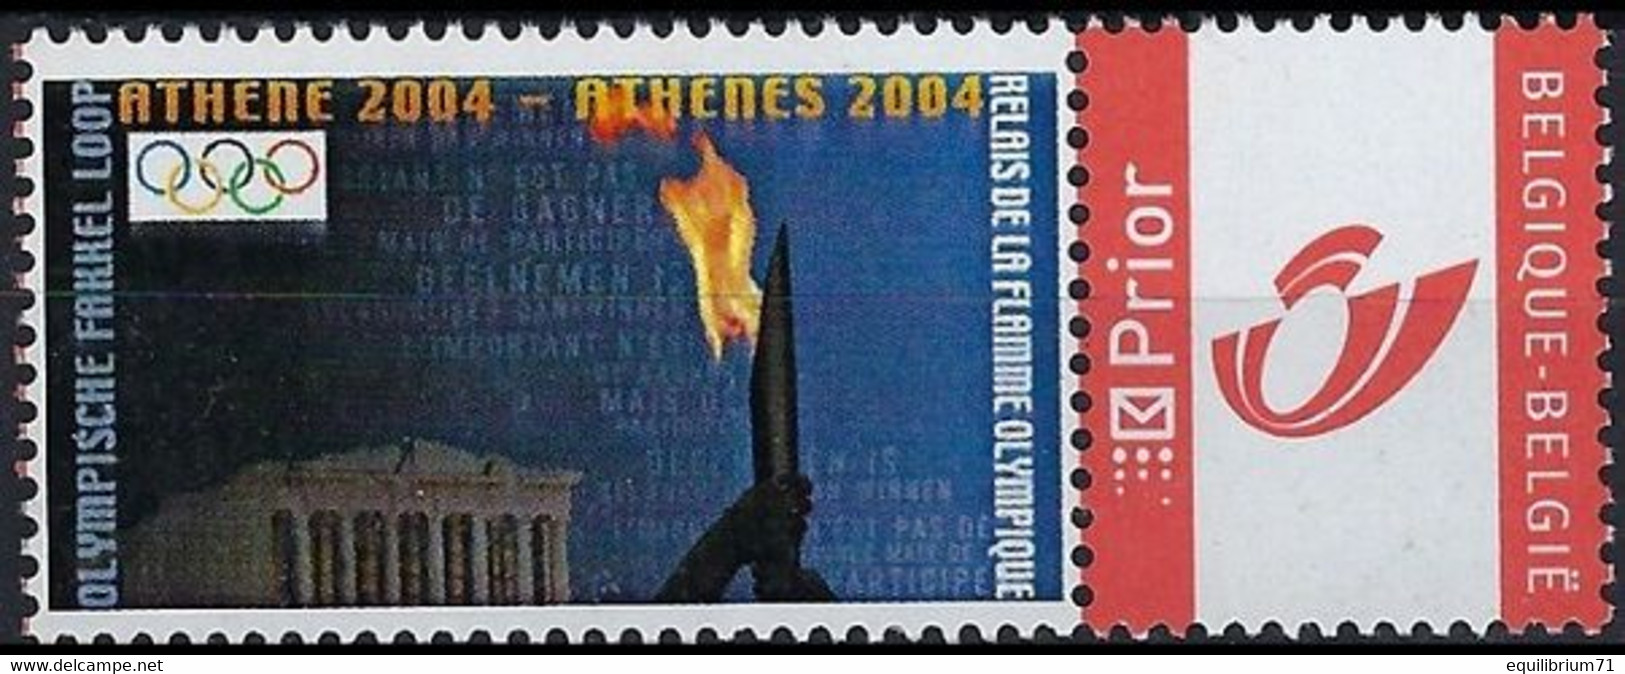 DUOSTAMP** / MYSTAMP** - Relais De La Flamme Des Jeux Olympiques D'Athènes / Olympische Spelen Fakkelloop Athene - 2004 - Verano 2004: Atenas - Paralympic